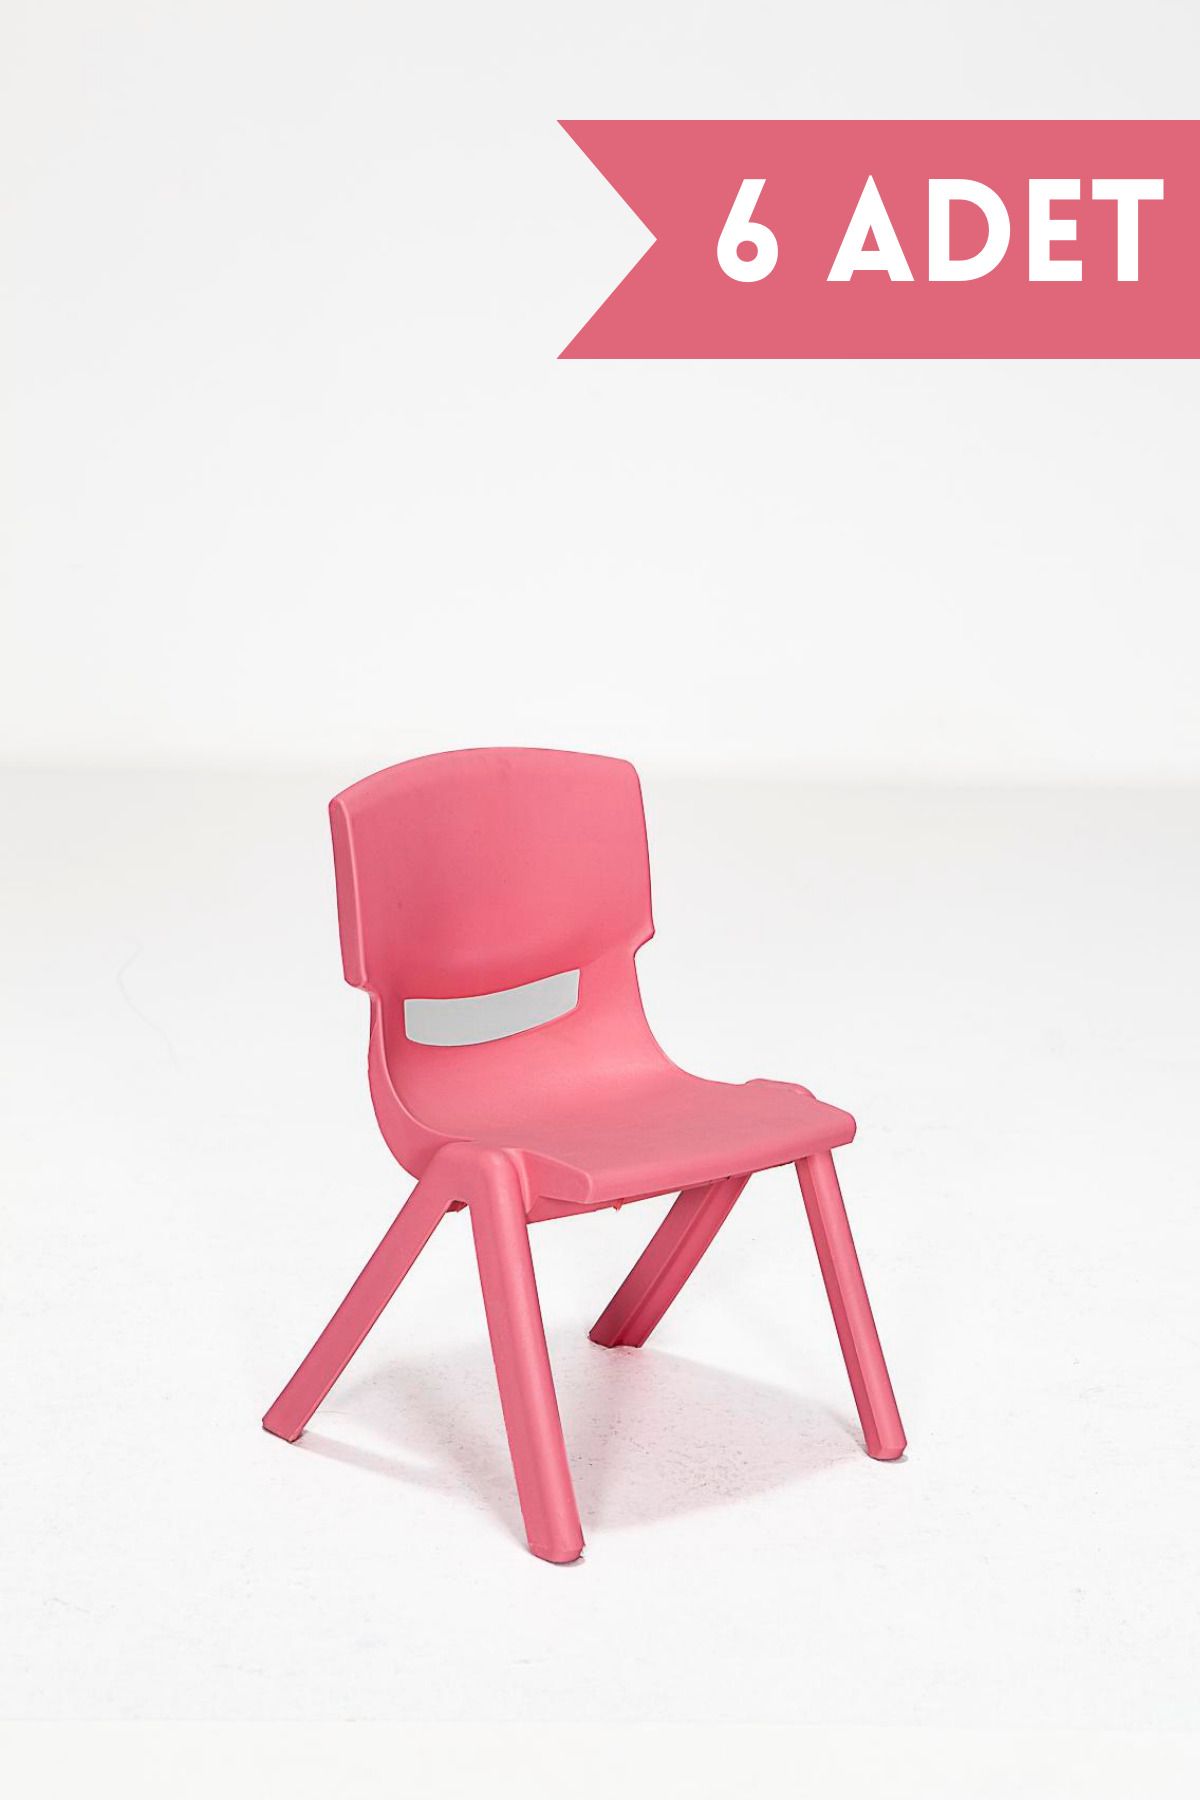 MOBETTO 6 Adet Kreş Anaokulu Çocuk Sandalyesi Sert Plastik- Pembe